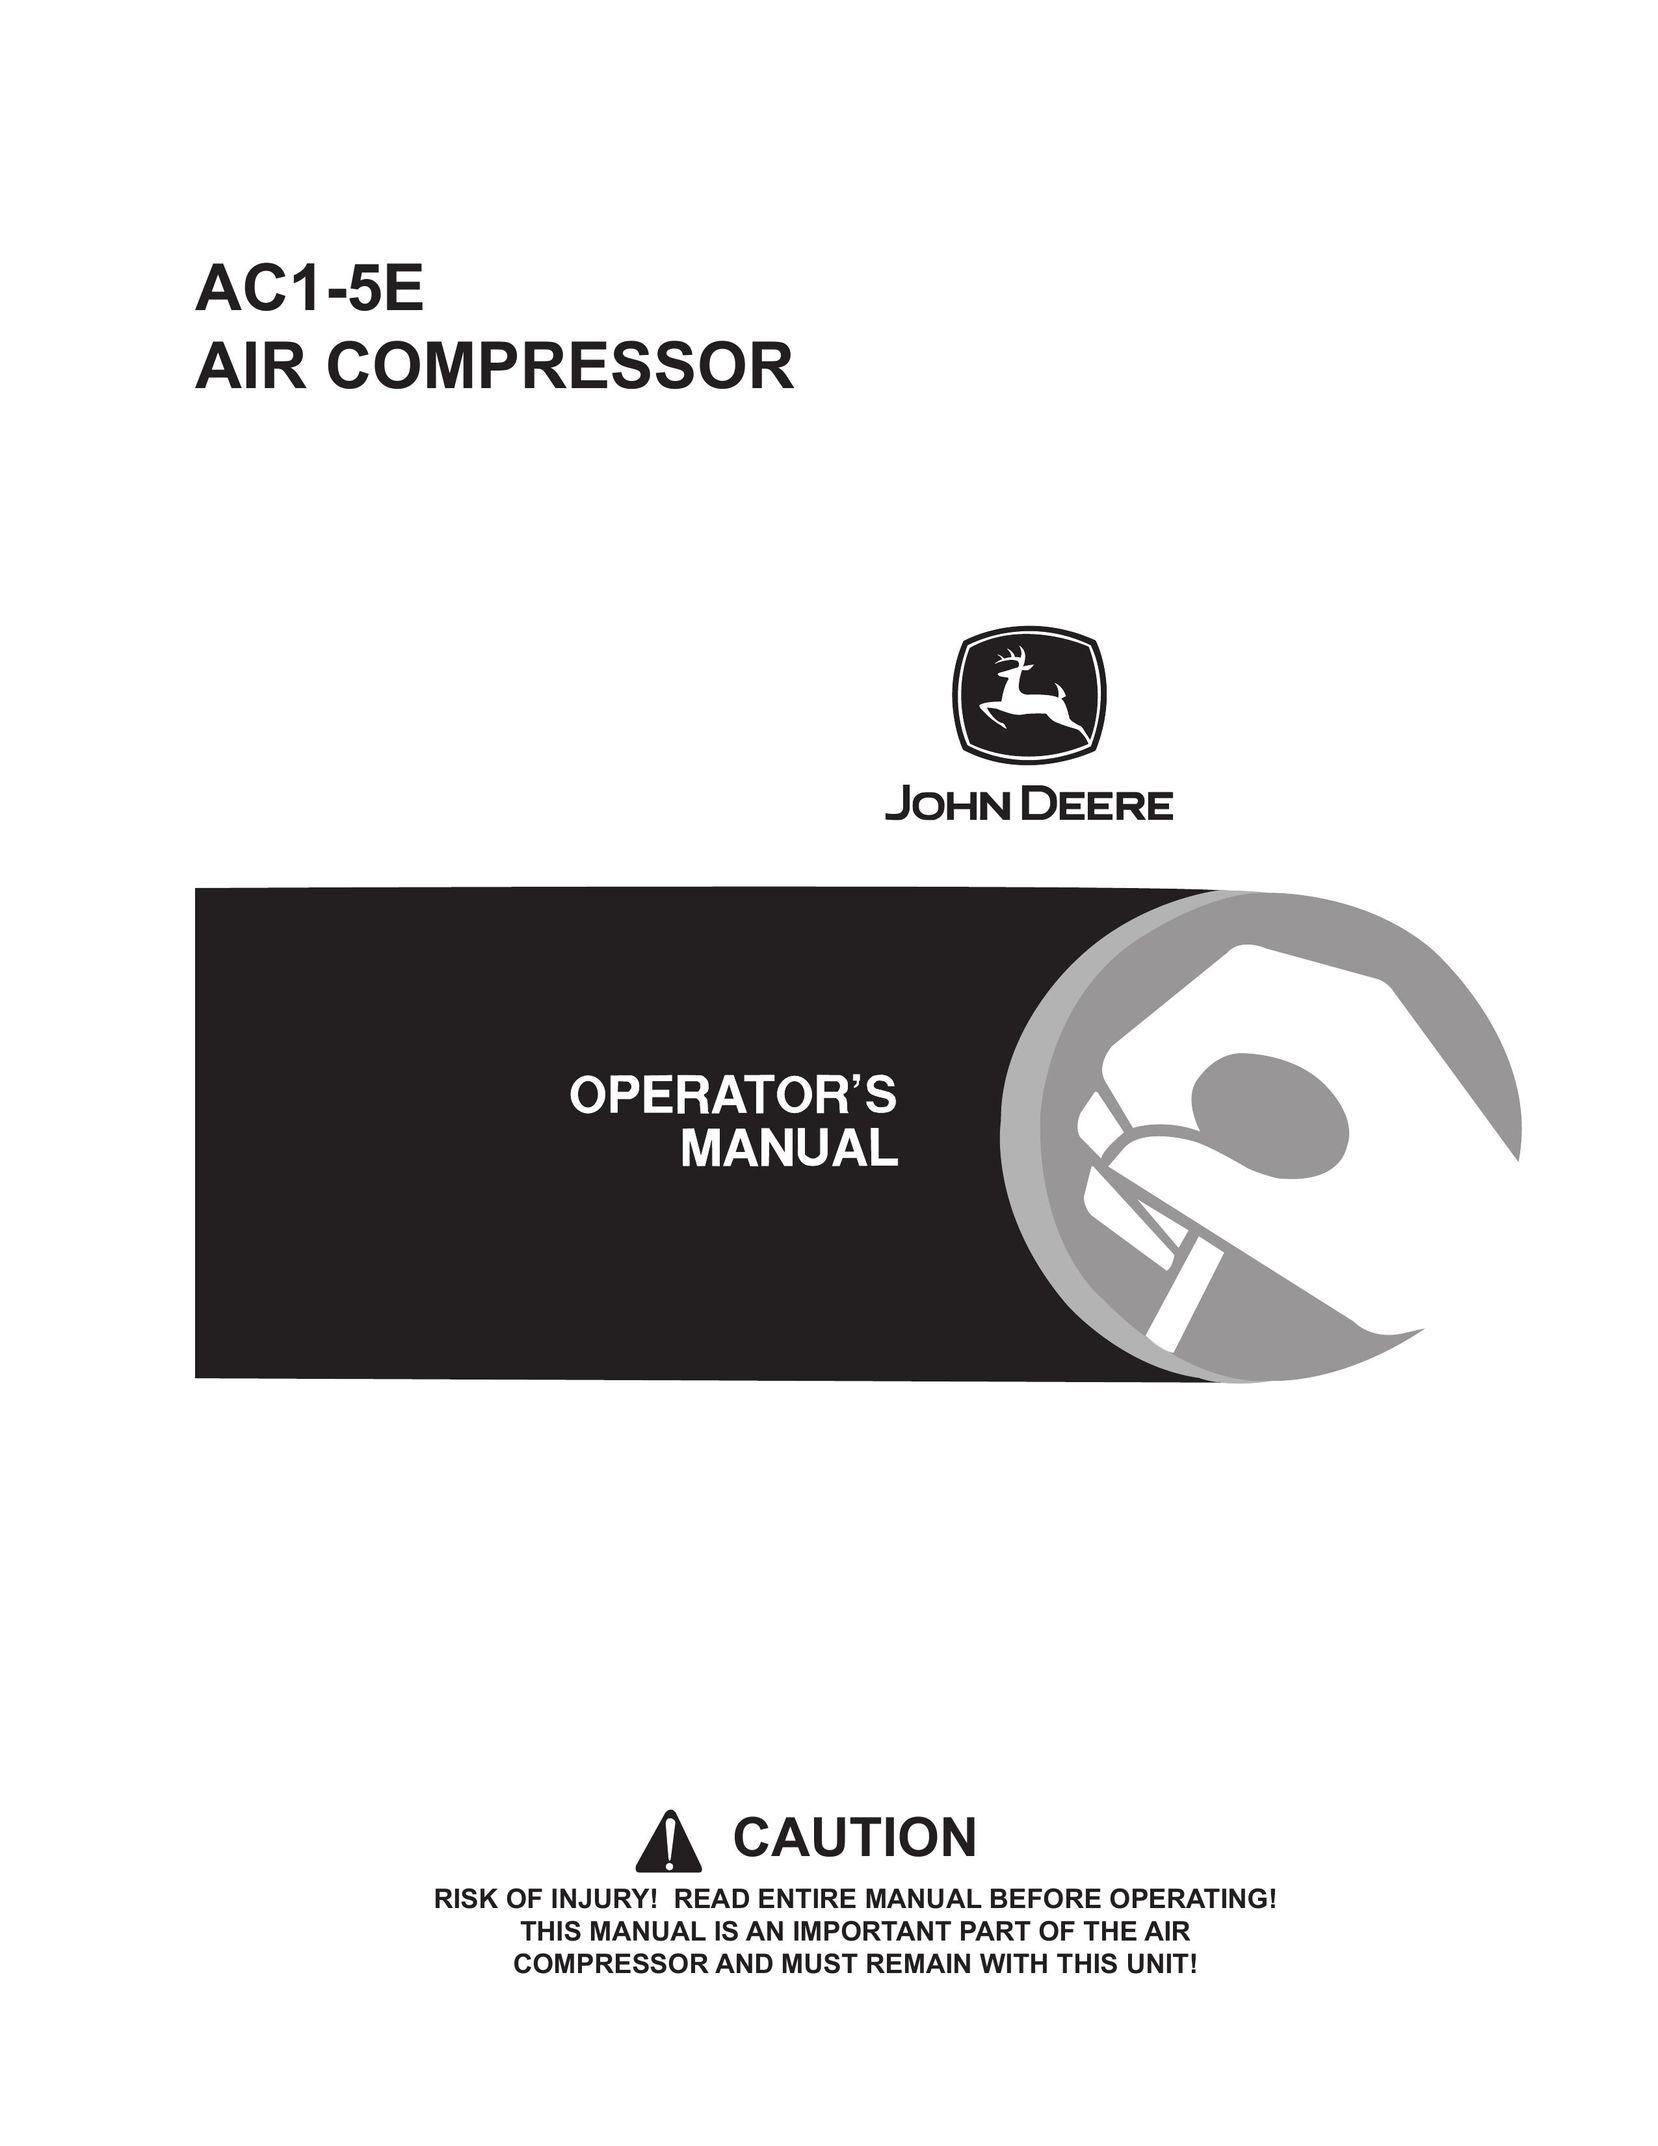 John Deere AC1-5E Air Compressor User Manual